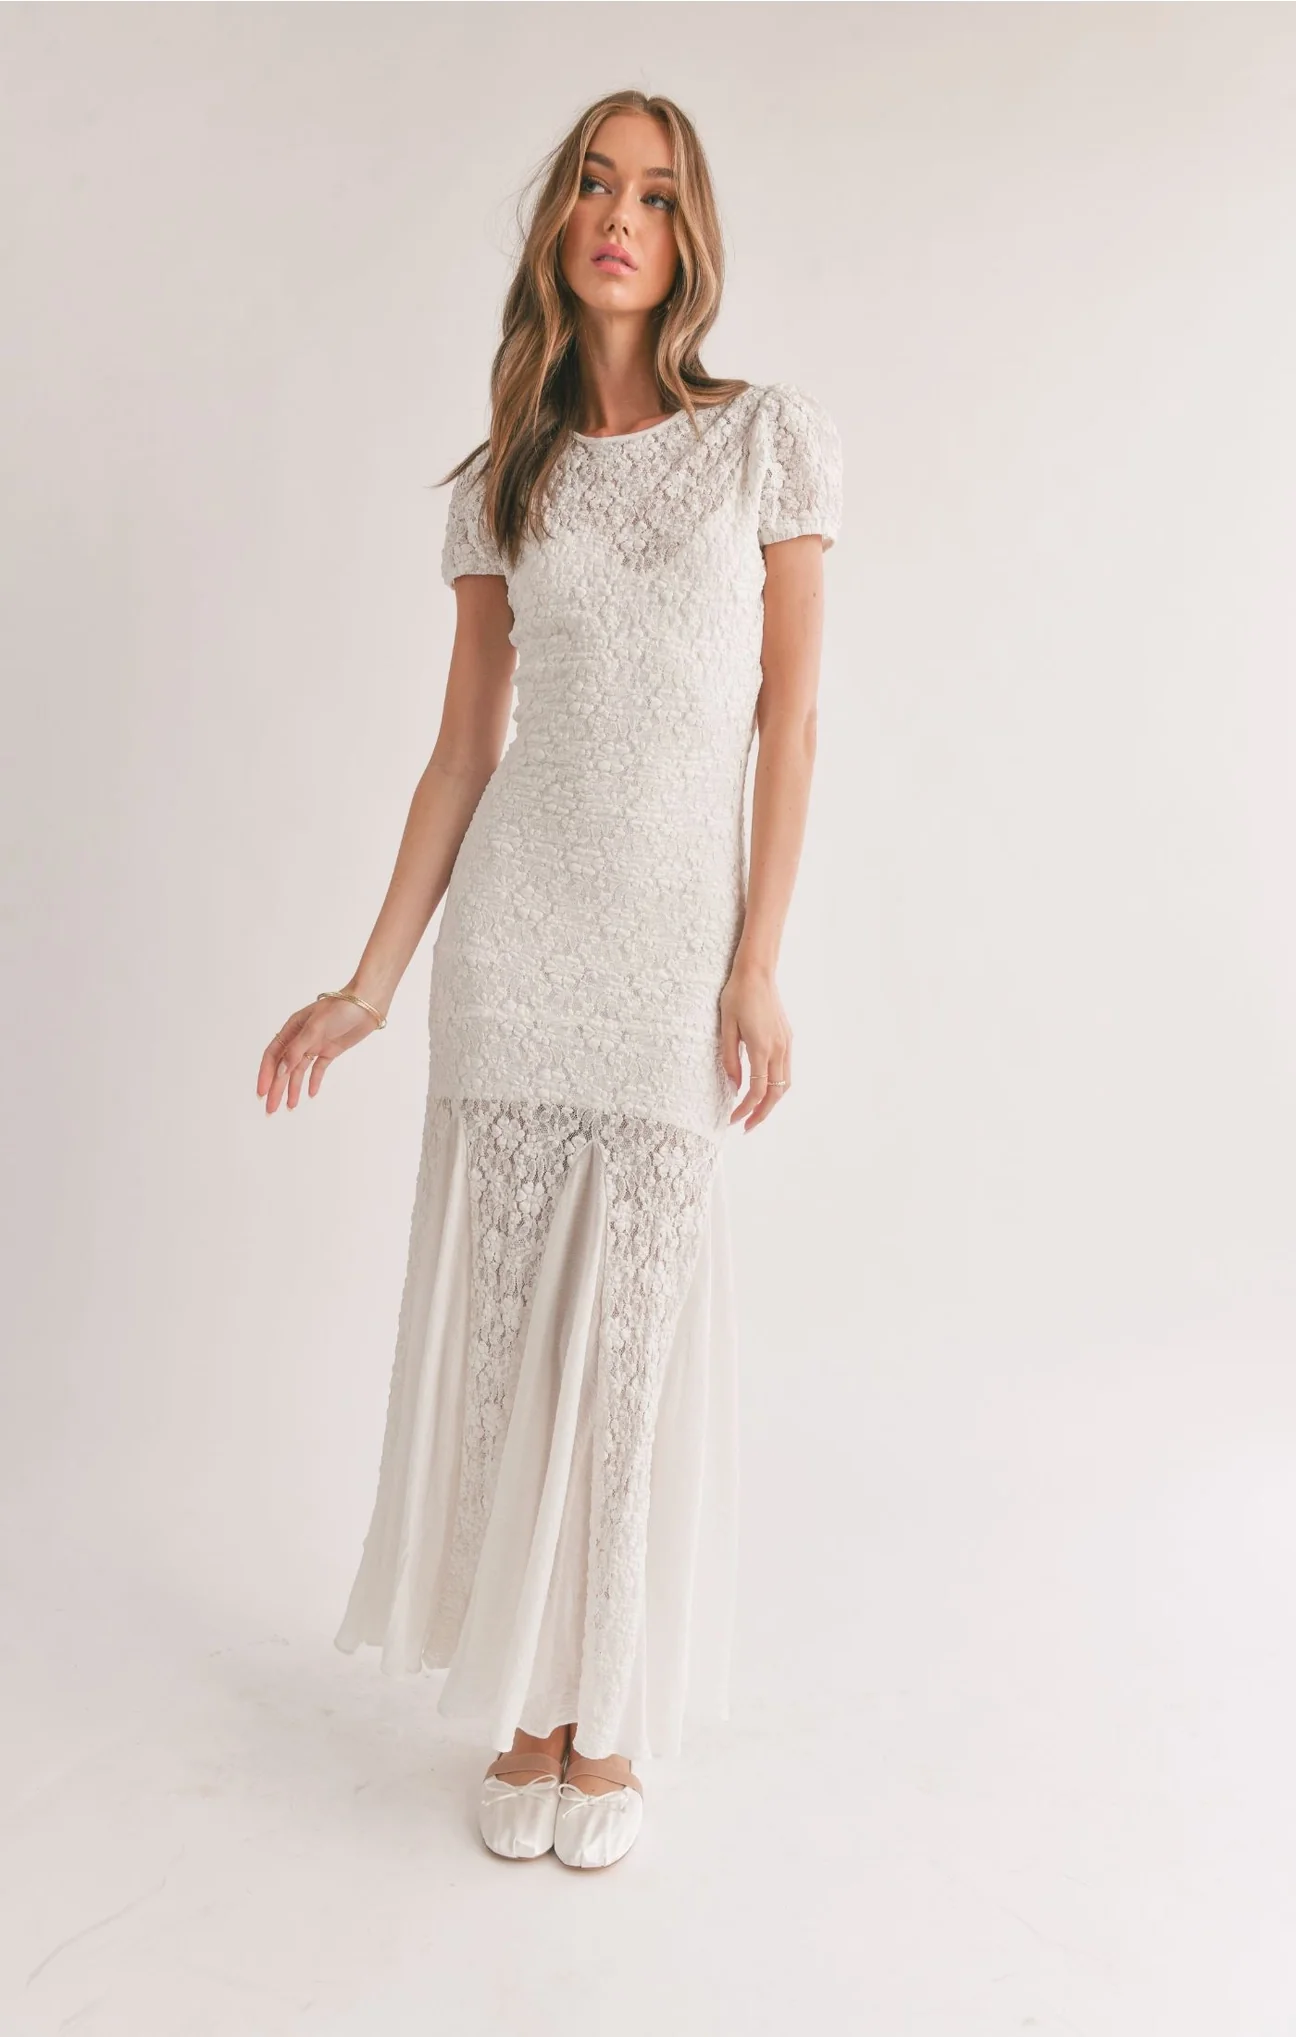 QUIET LIGHT GODET FLARE MAXI DRESS IN WHITE - Honest Boutique